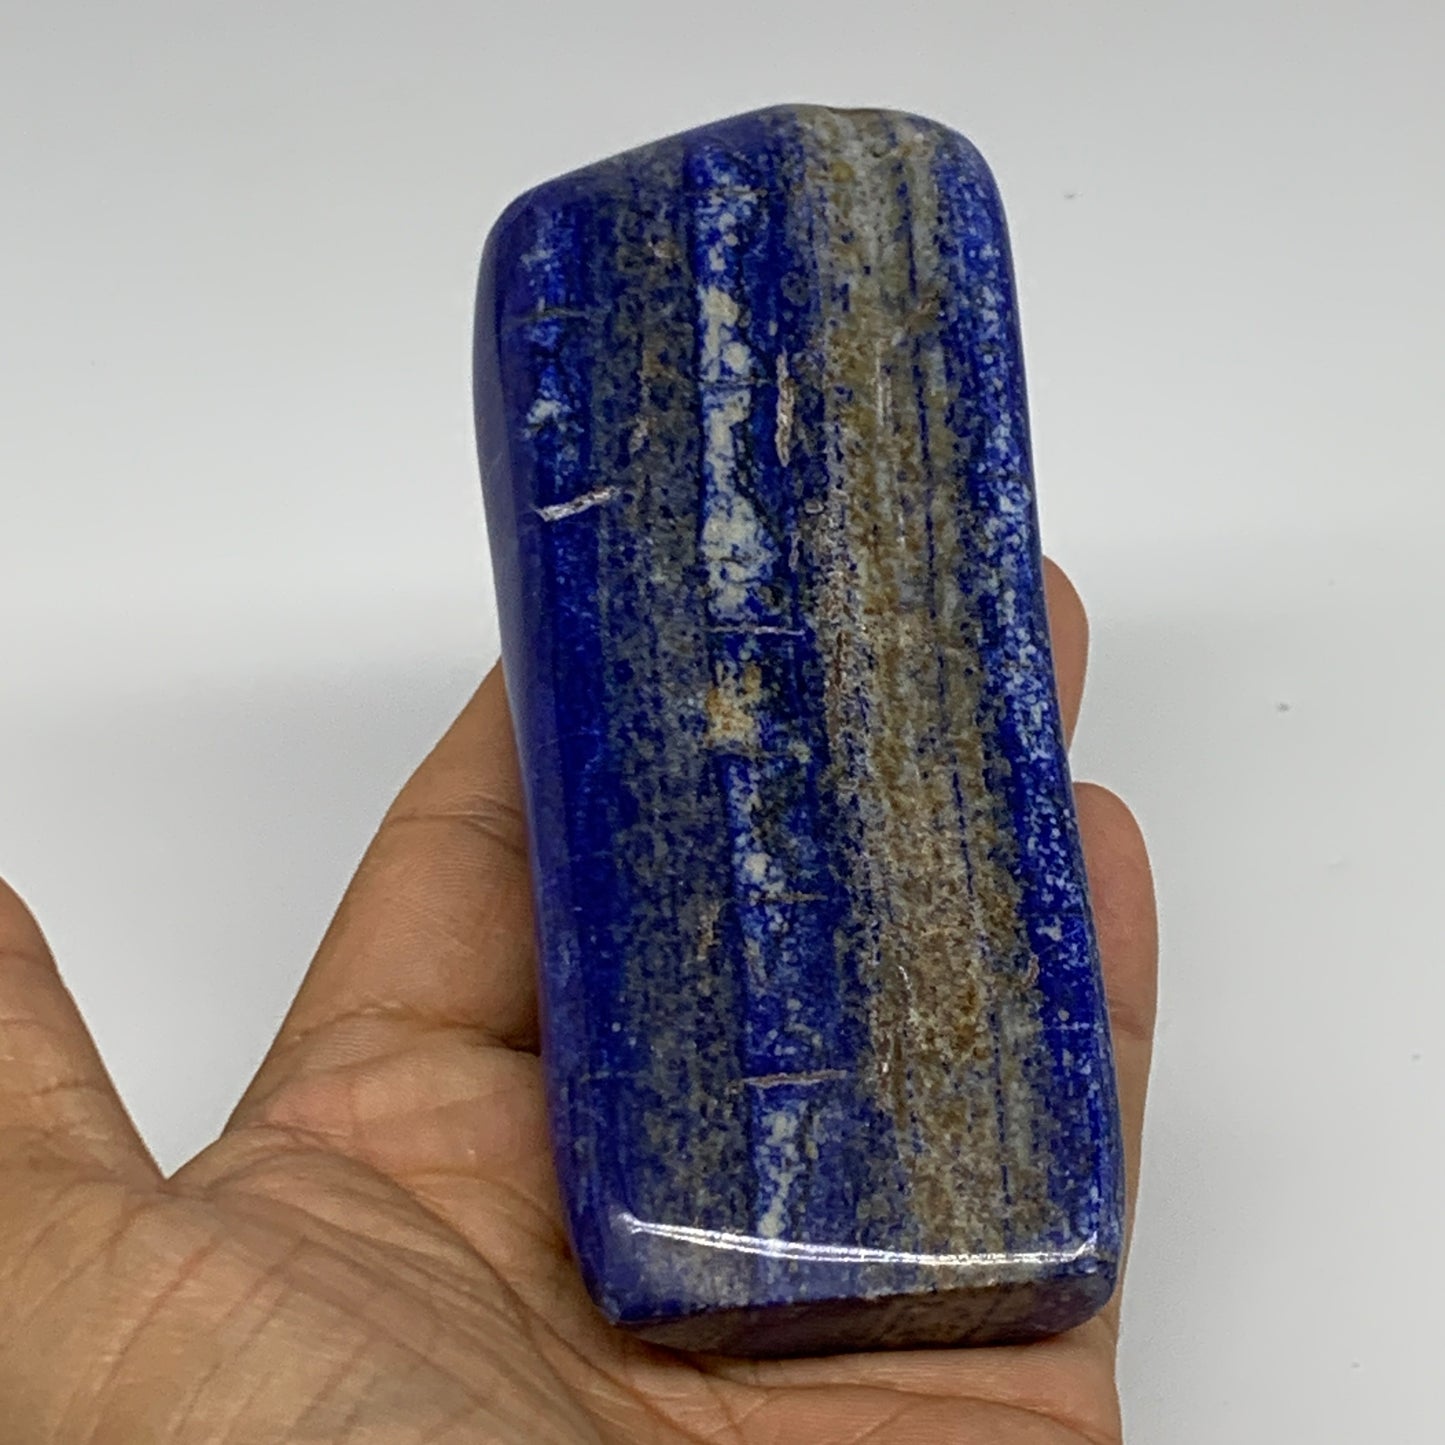 0.59 lbs, 4.9"x1.9"x0.8", Natural Freeform Lapis Lazuli from Afghanistan, B33396